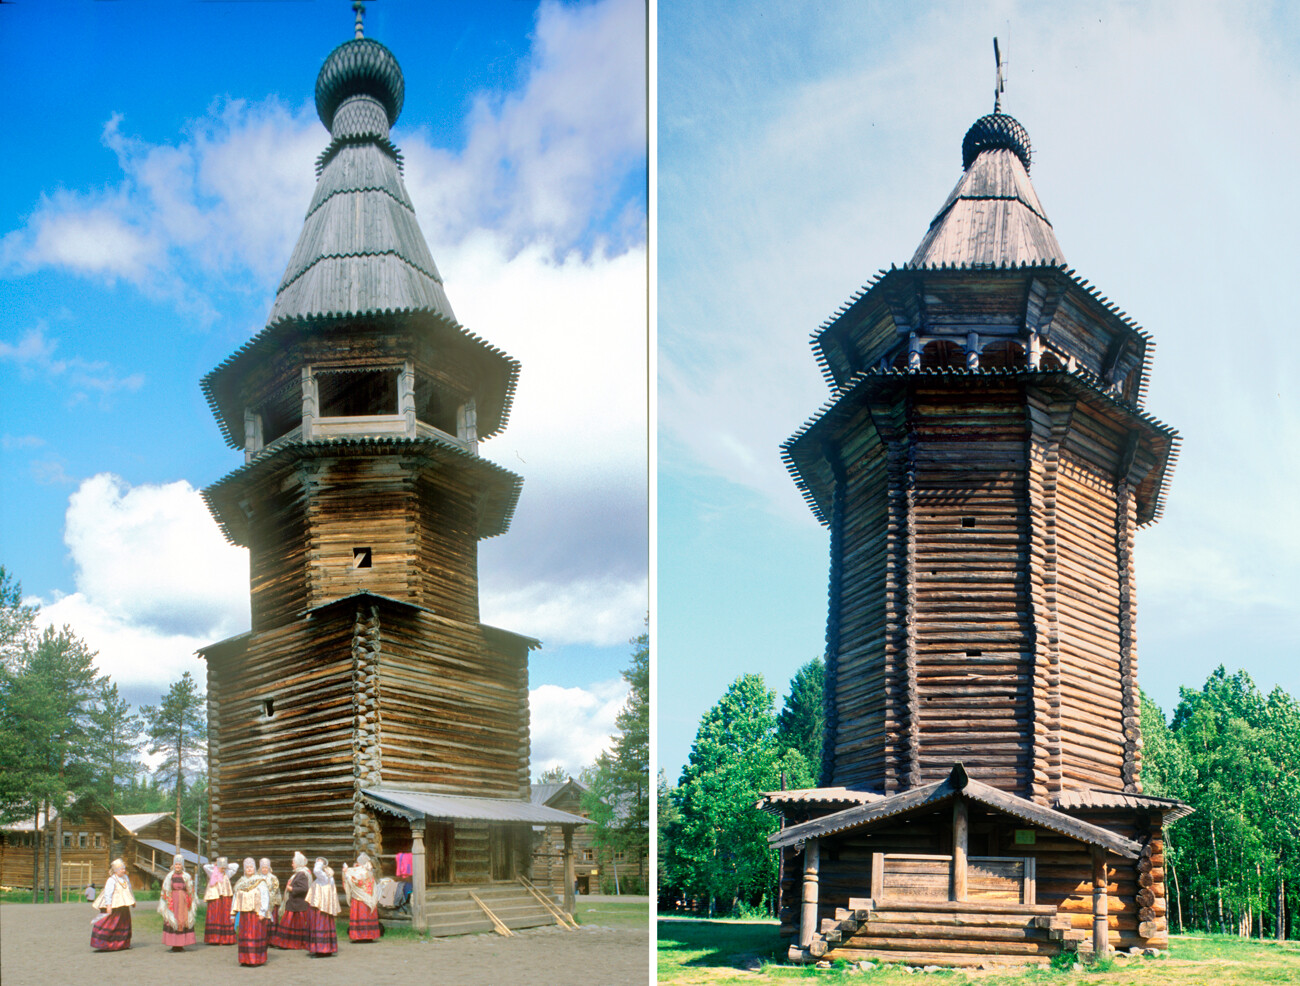 Left: Log bell tower at Church of the Ascension, Kushereka village. June 21, 2003.
Rigth: Log bell tower from Kuliga-Drakovanovo village, Krasnoborsk district. June 22, 1999